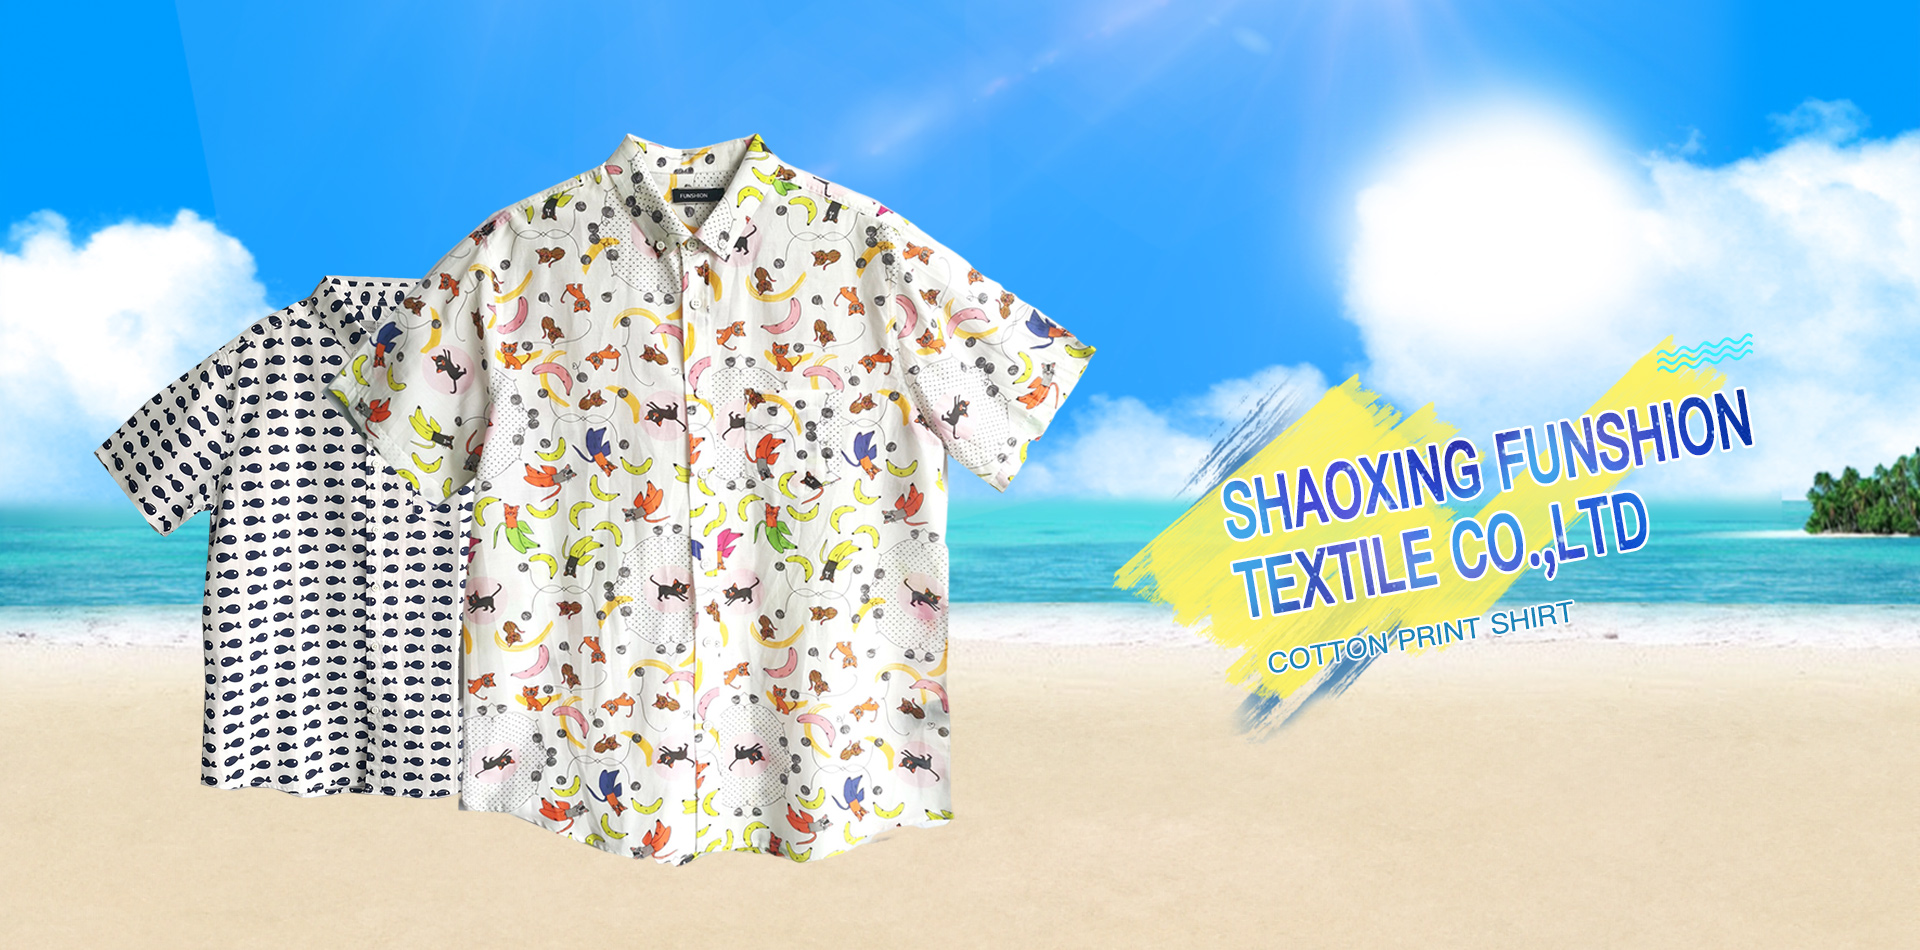 Shaoxing Funshion Textile Co.,Ltd